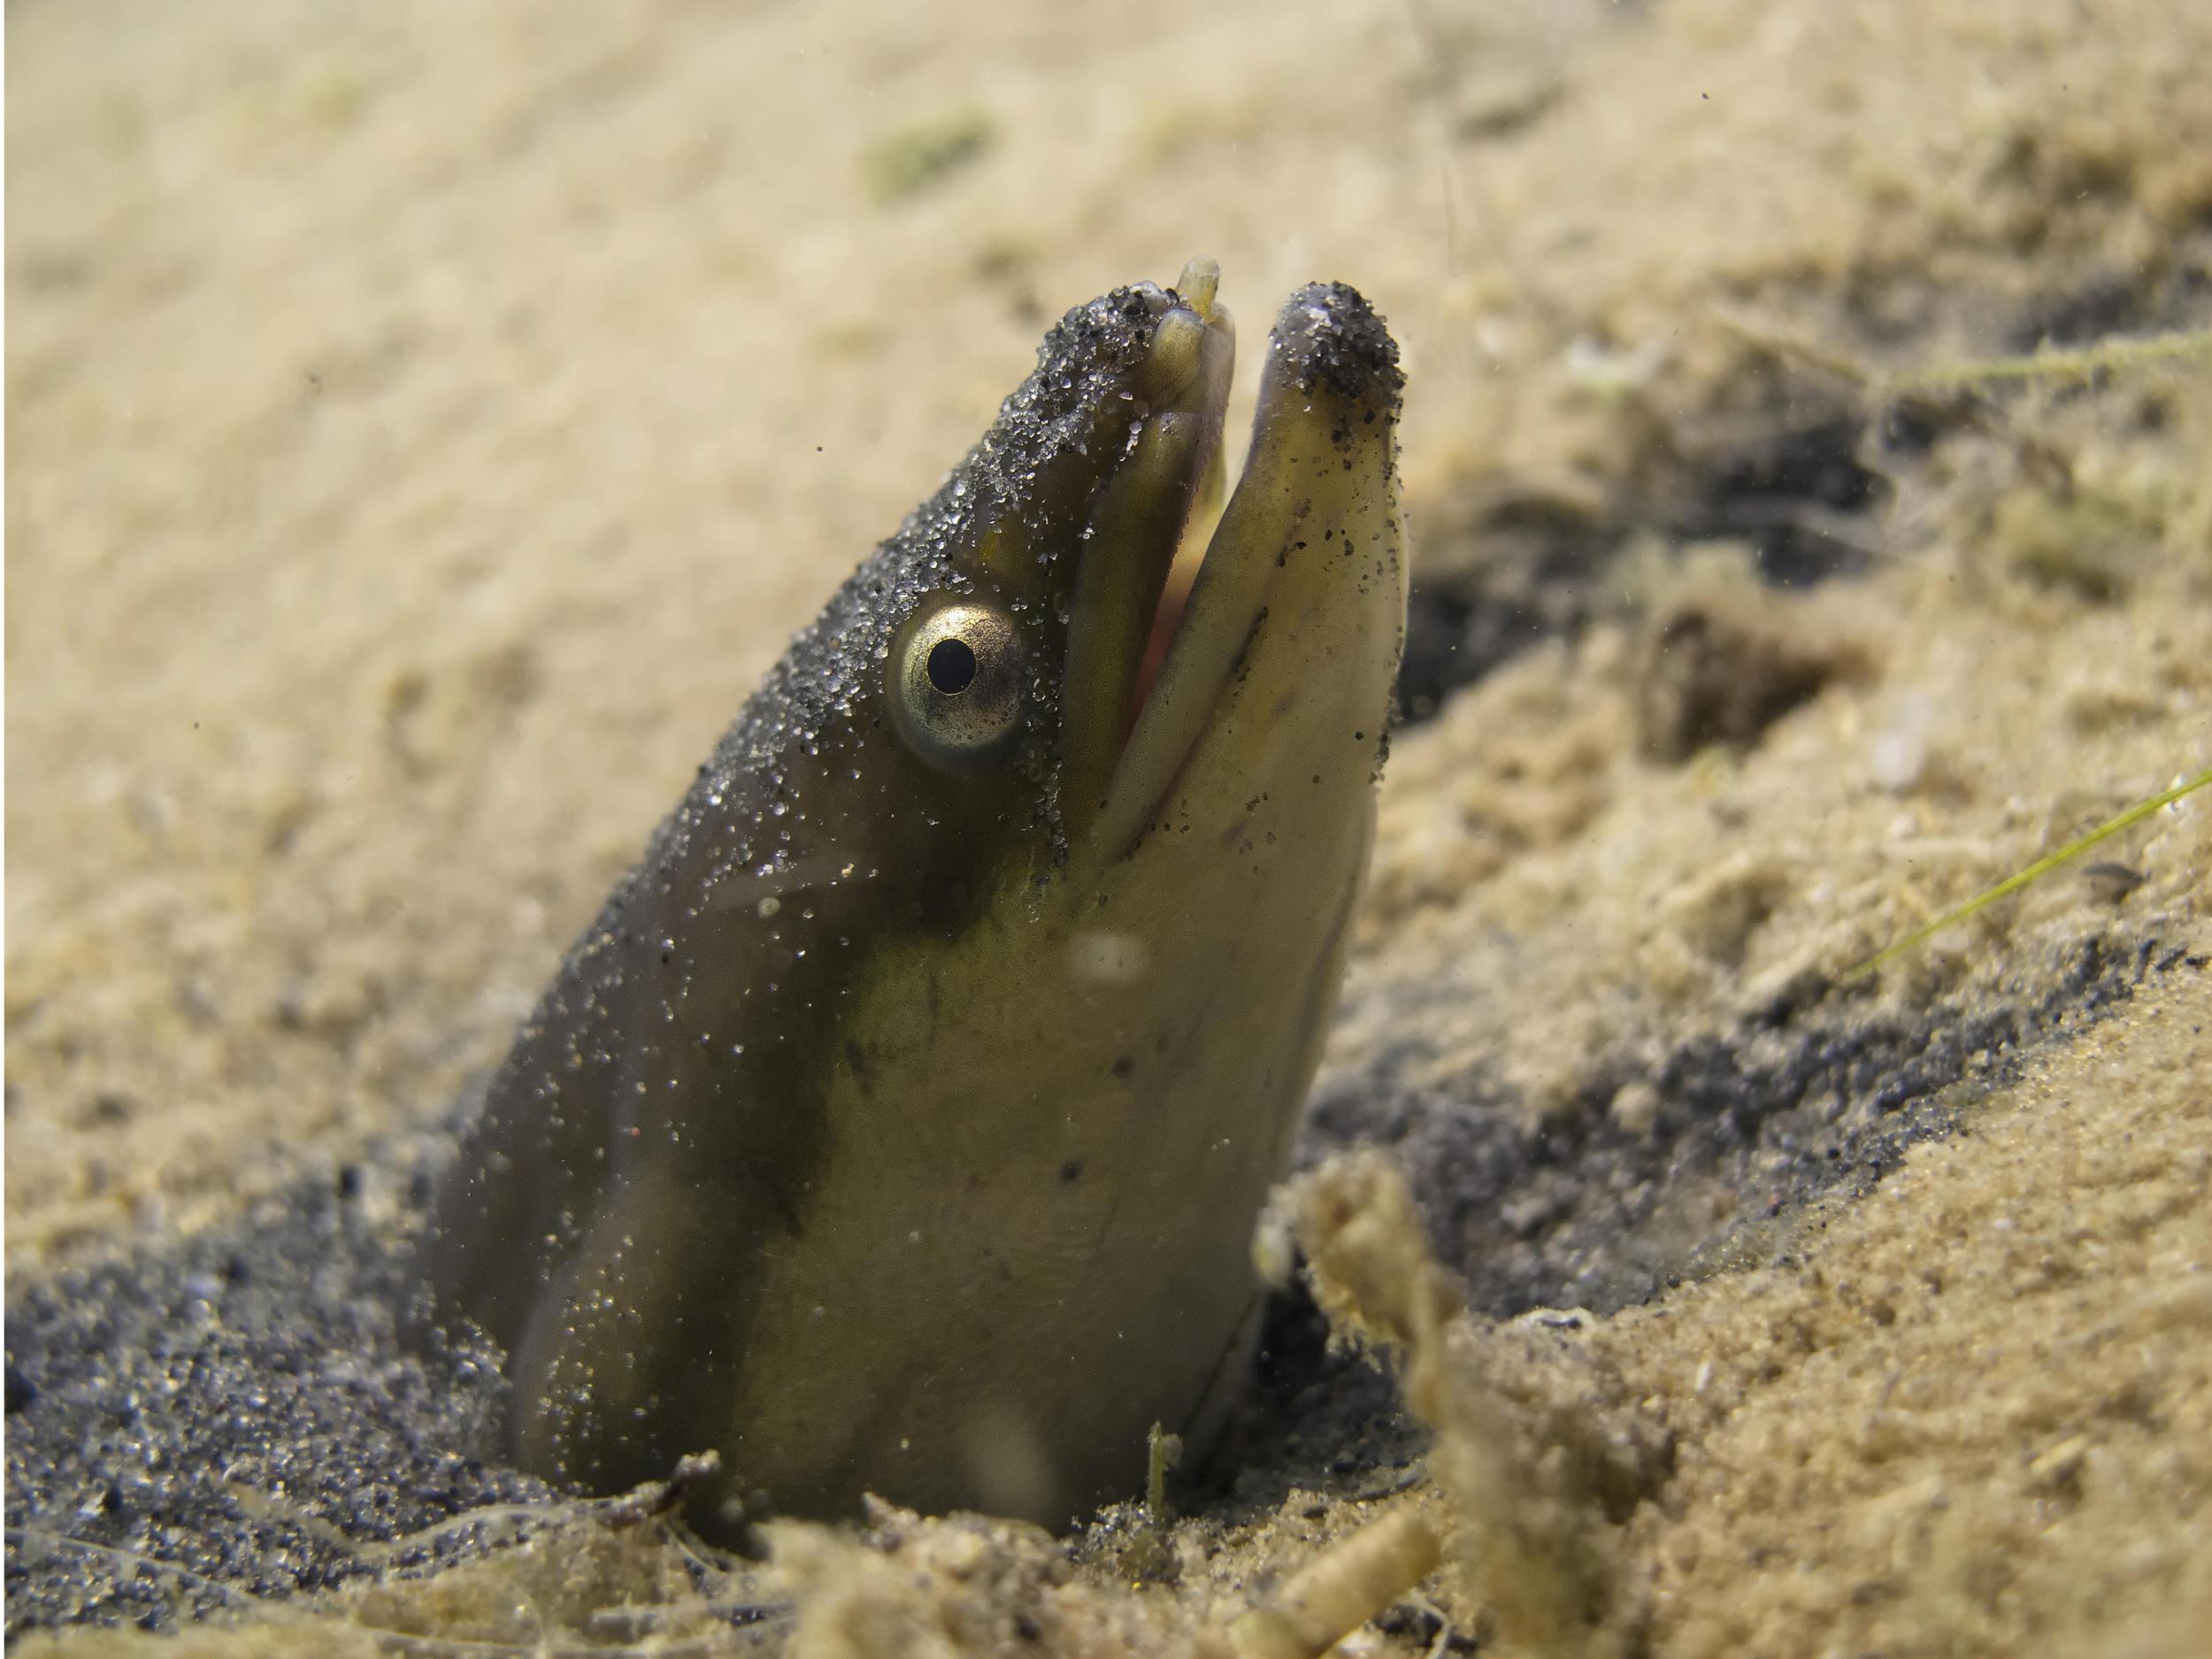 A European eel looks out of a sand hole in Lake Helenesee, near Frankfurt